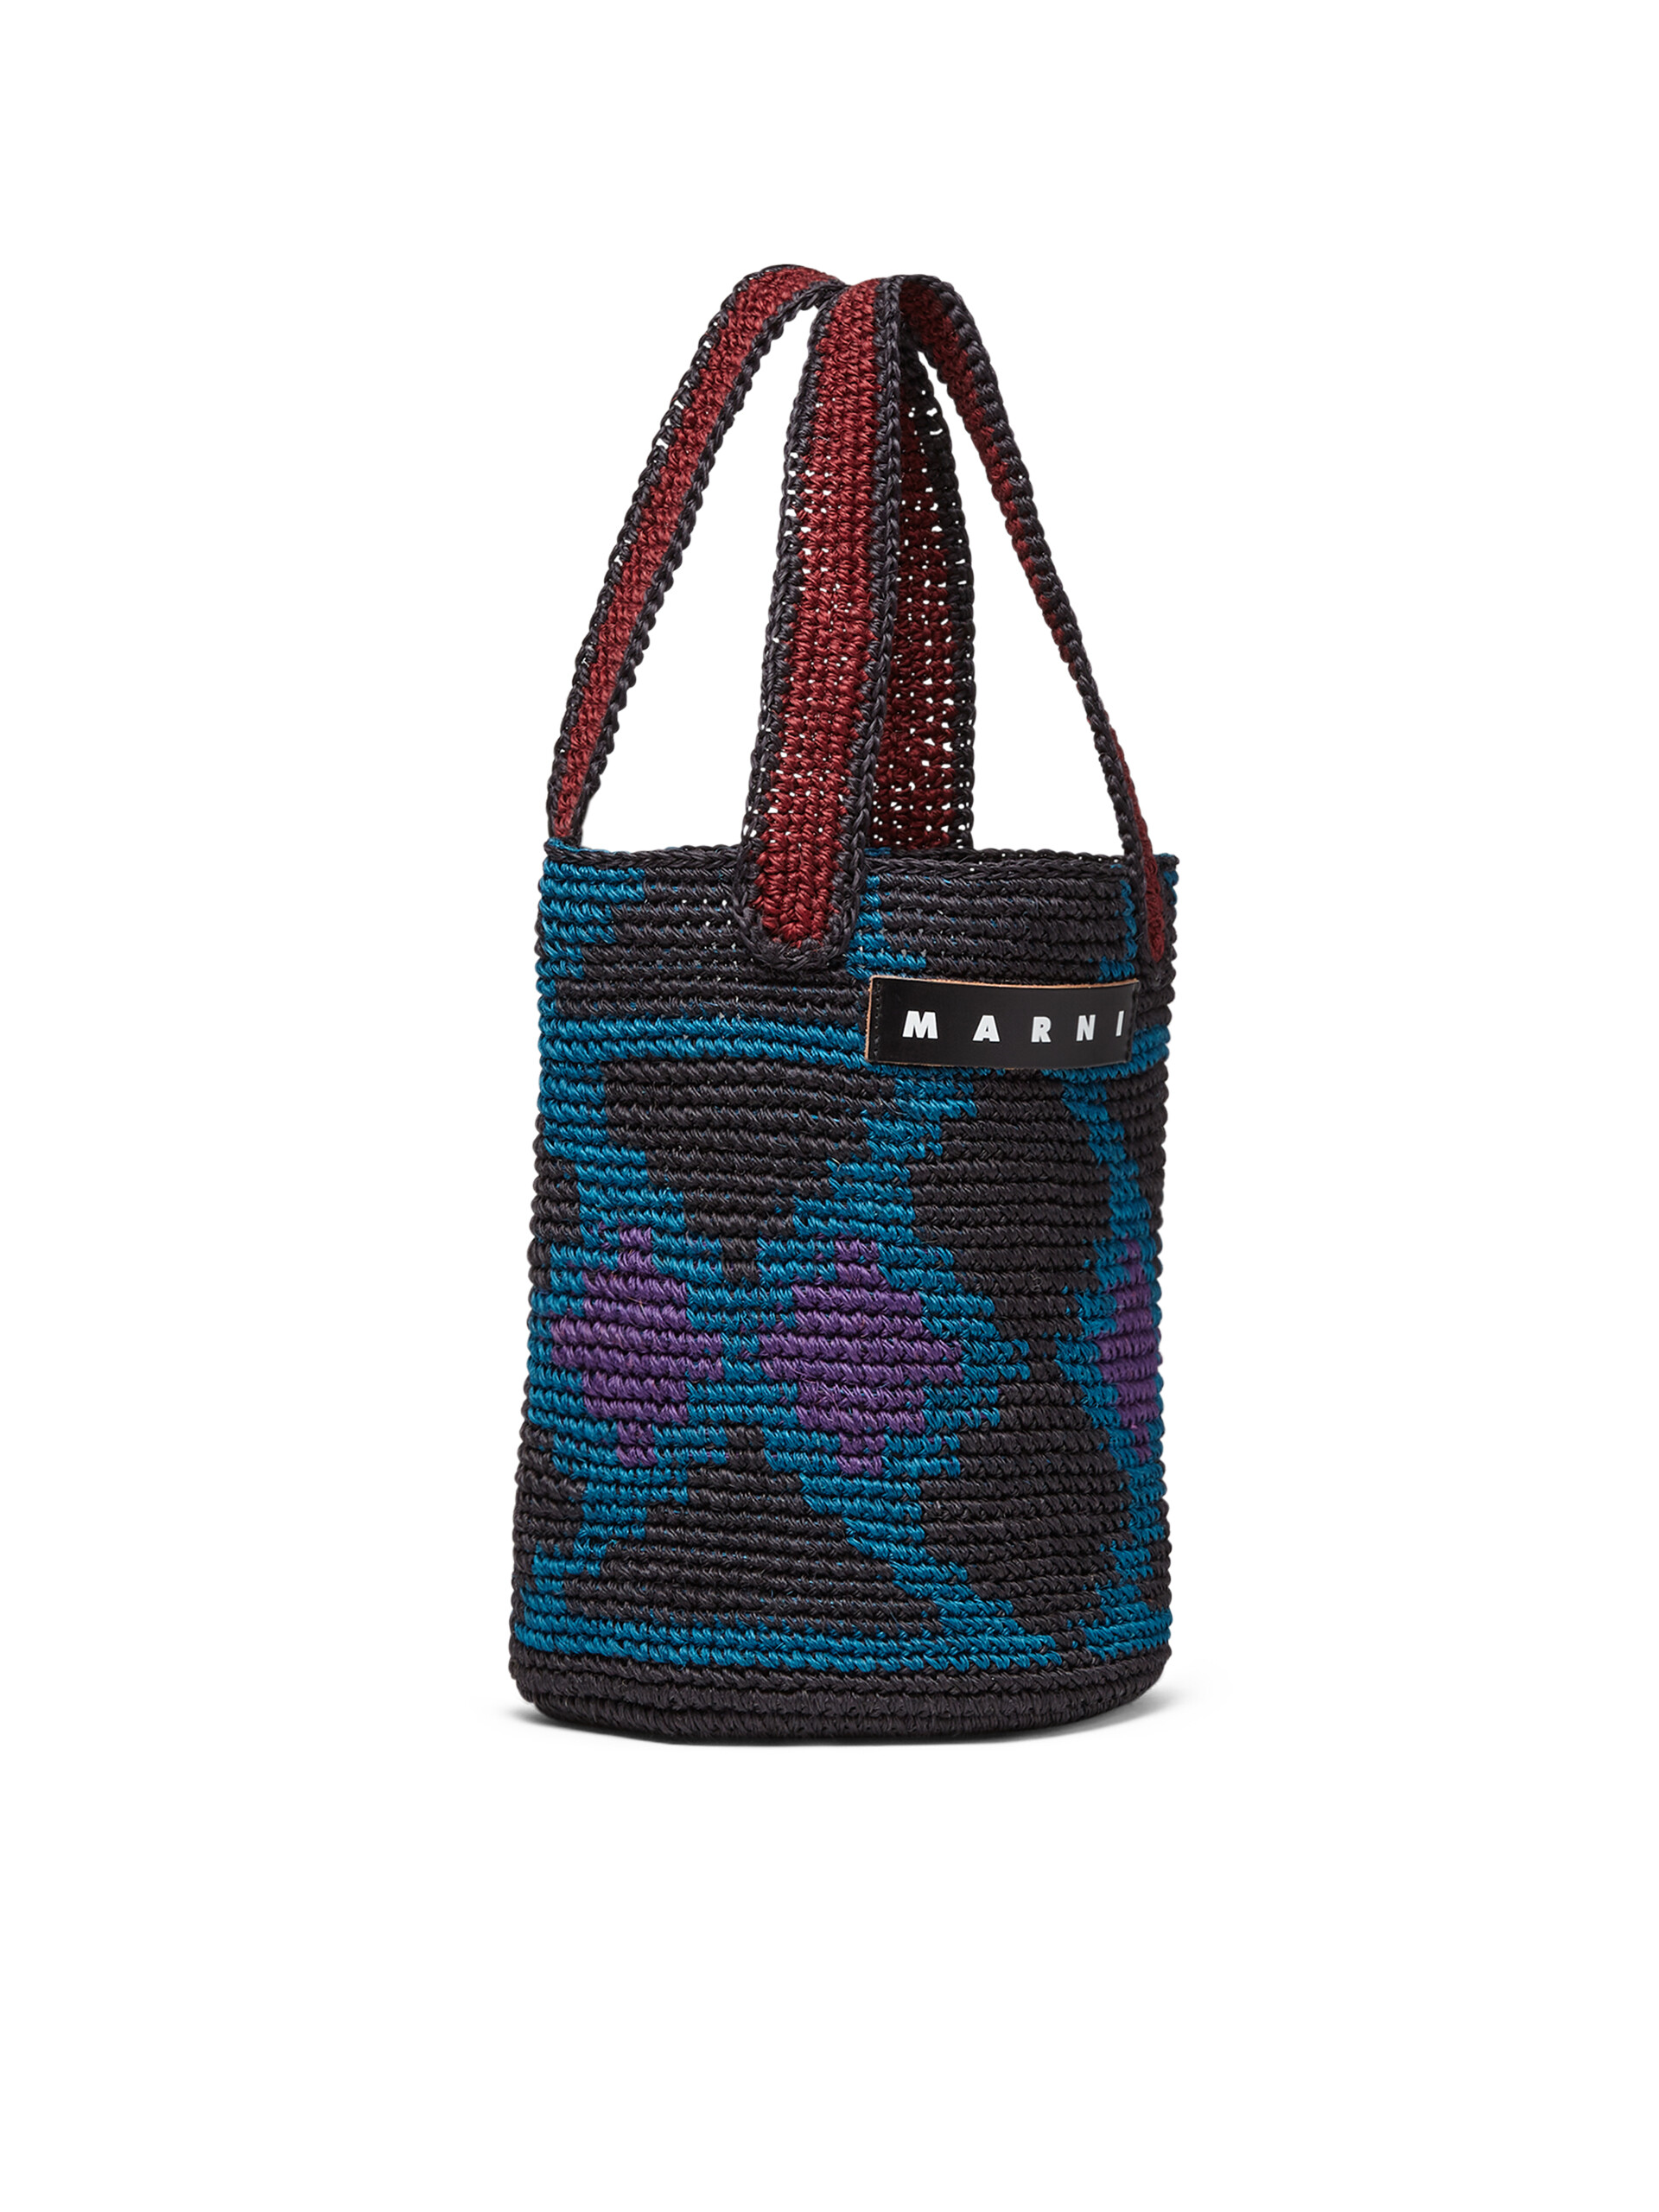 MARNI MARKET bag in multicolor black natural fibre - Shopping Bags - Image 2